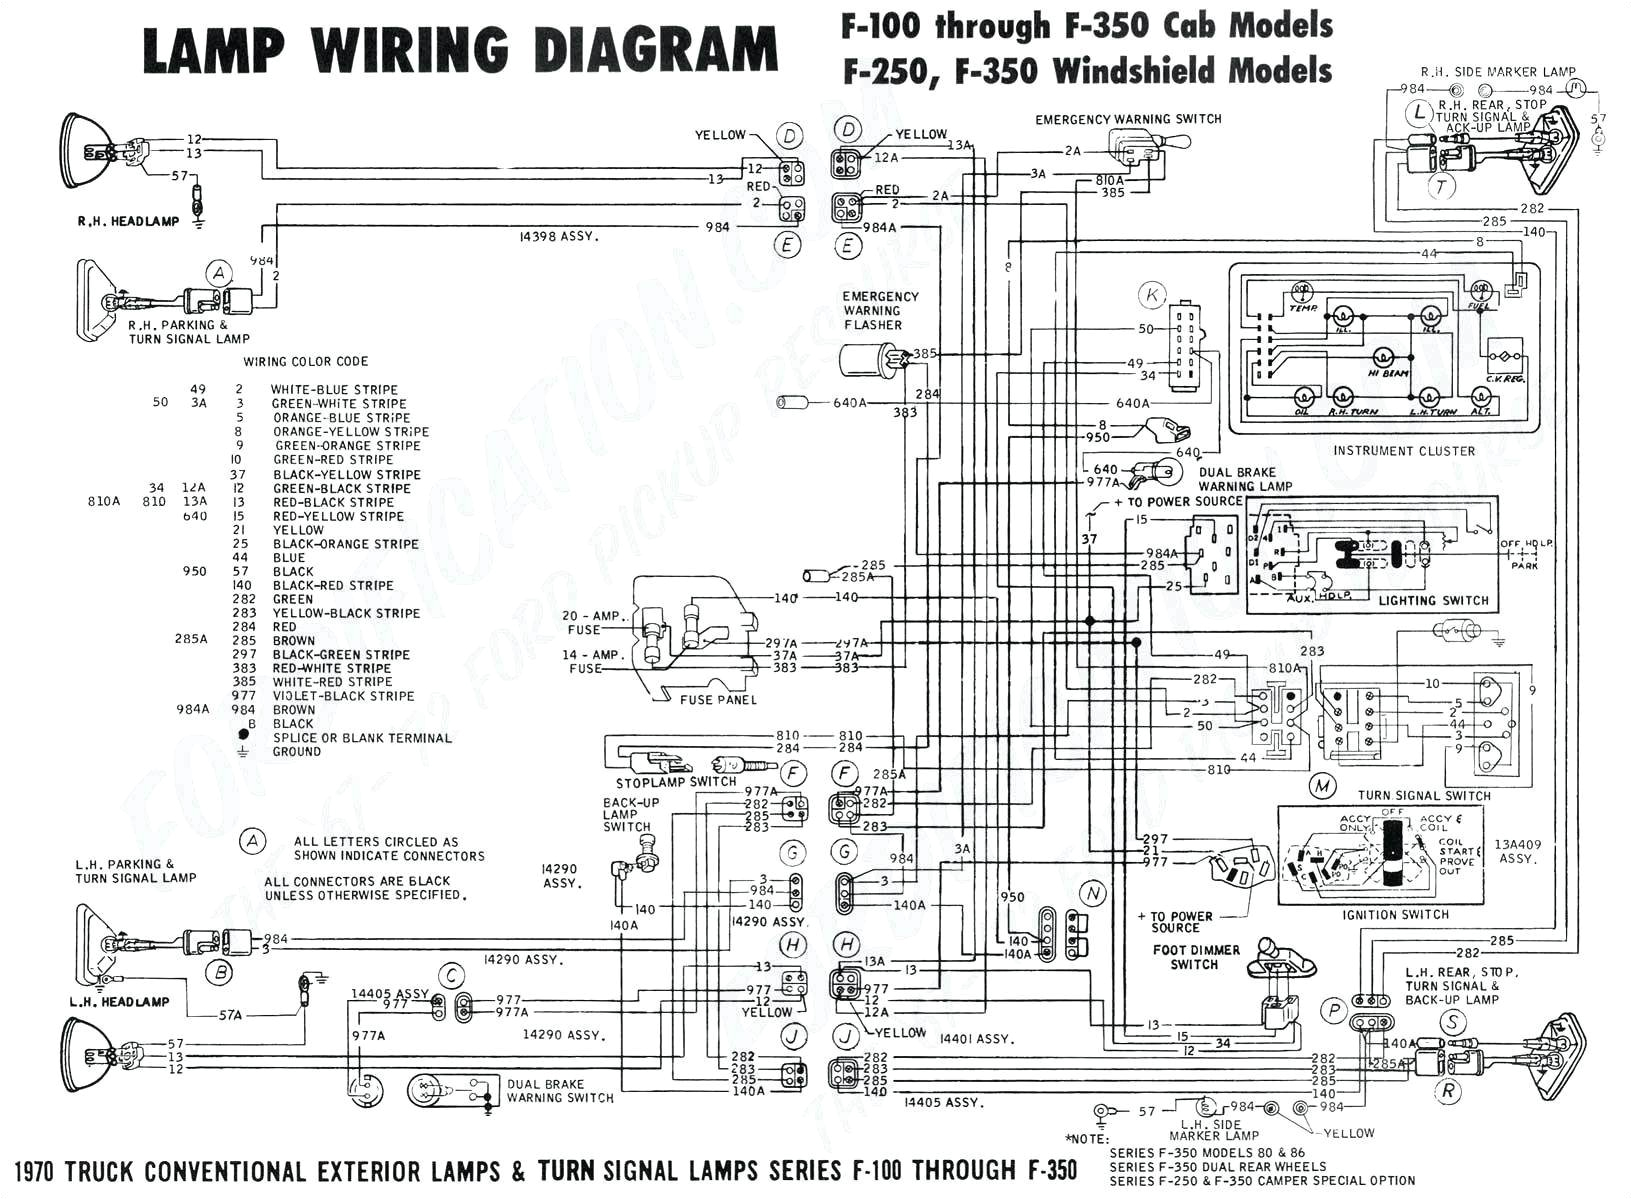 1971 aermacchi wiring diagram wiring diagram namea optilux wiring diagram wire diagram database 1971 aermacchi wiring